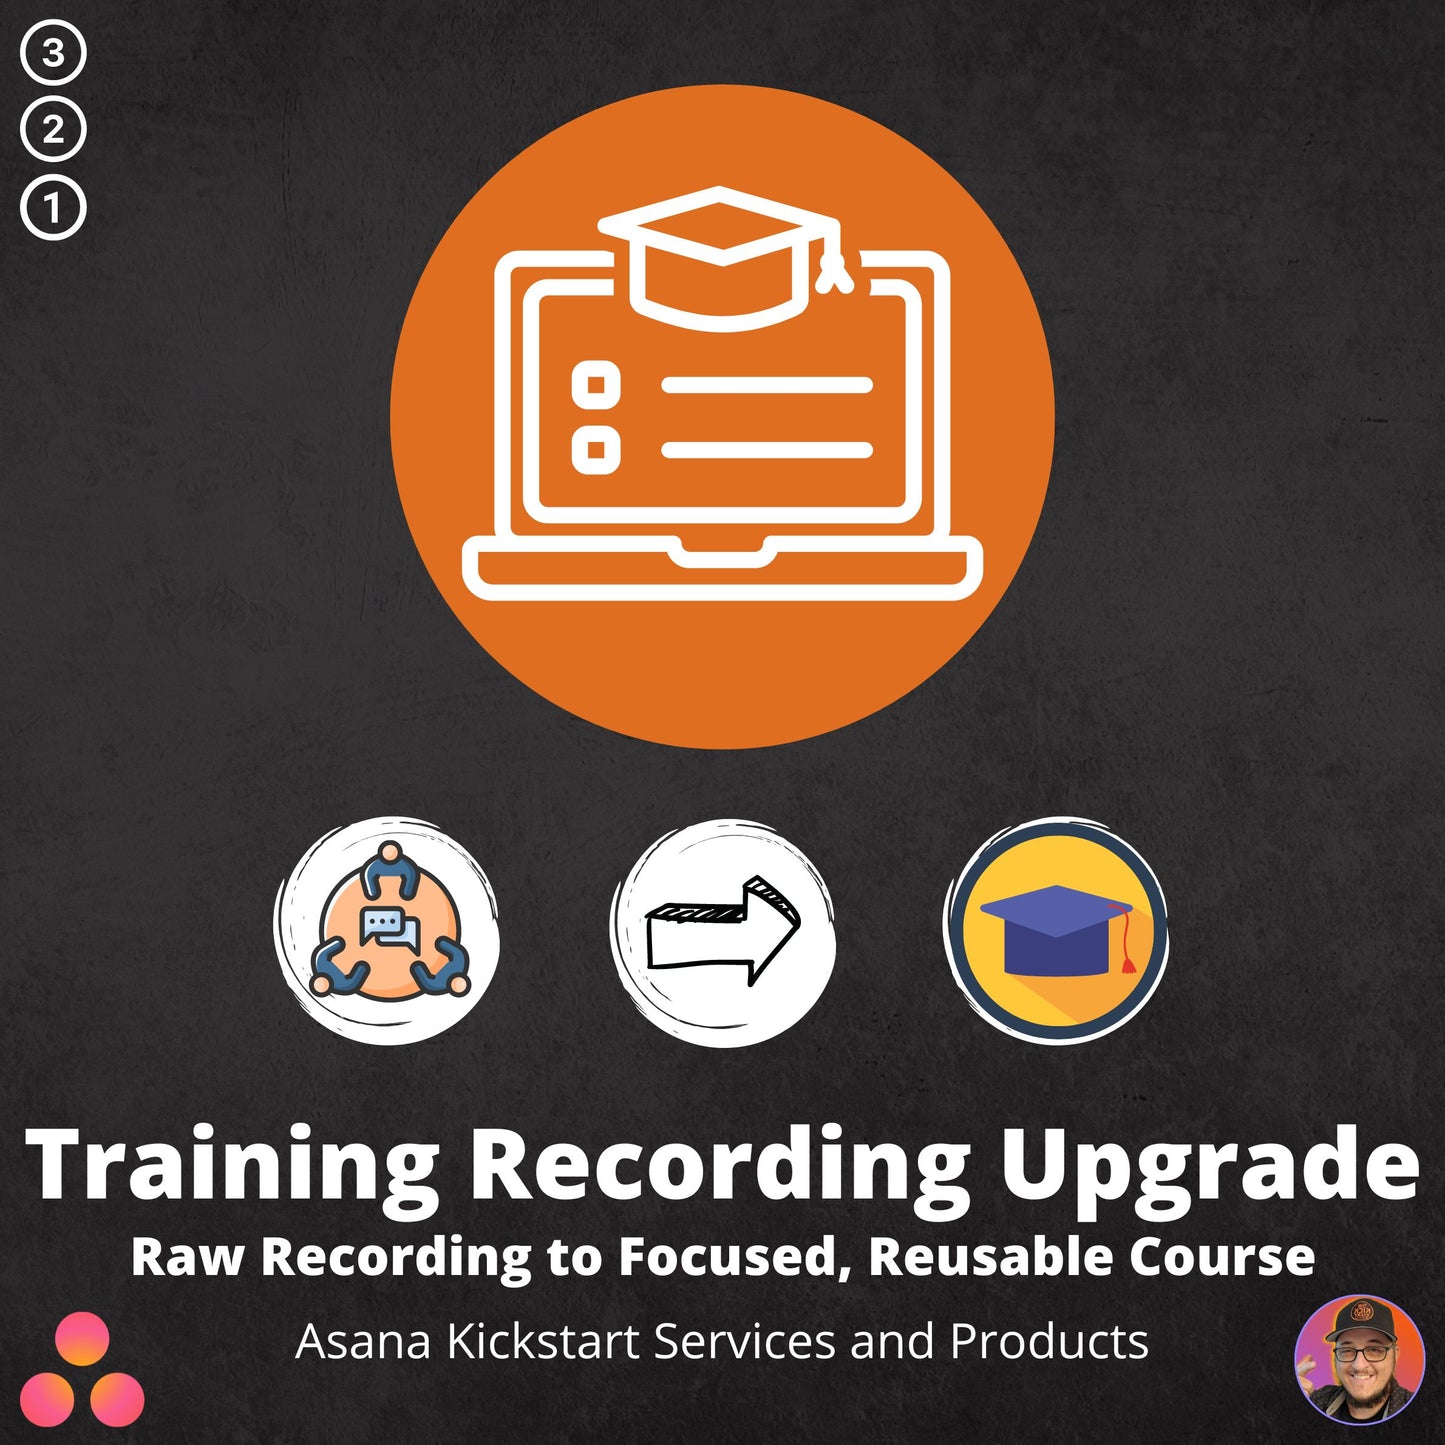 Training Recording Upgrade | Asana Kickstart Products